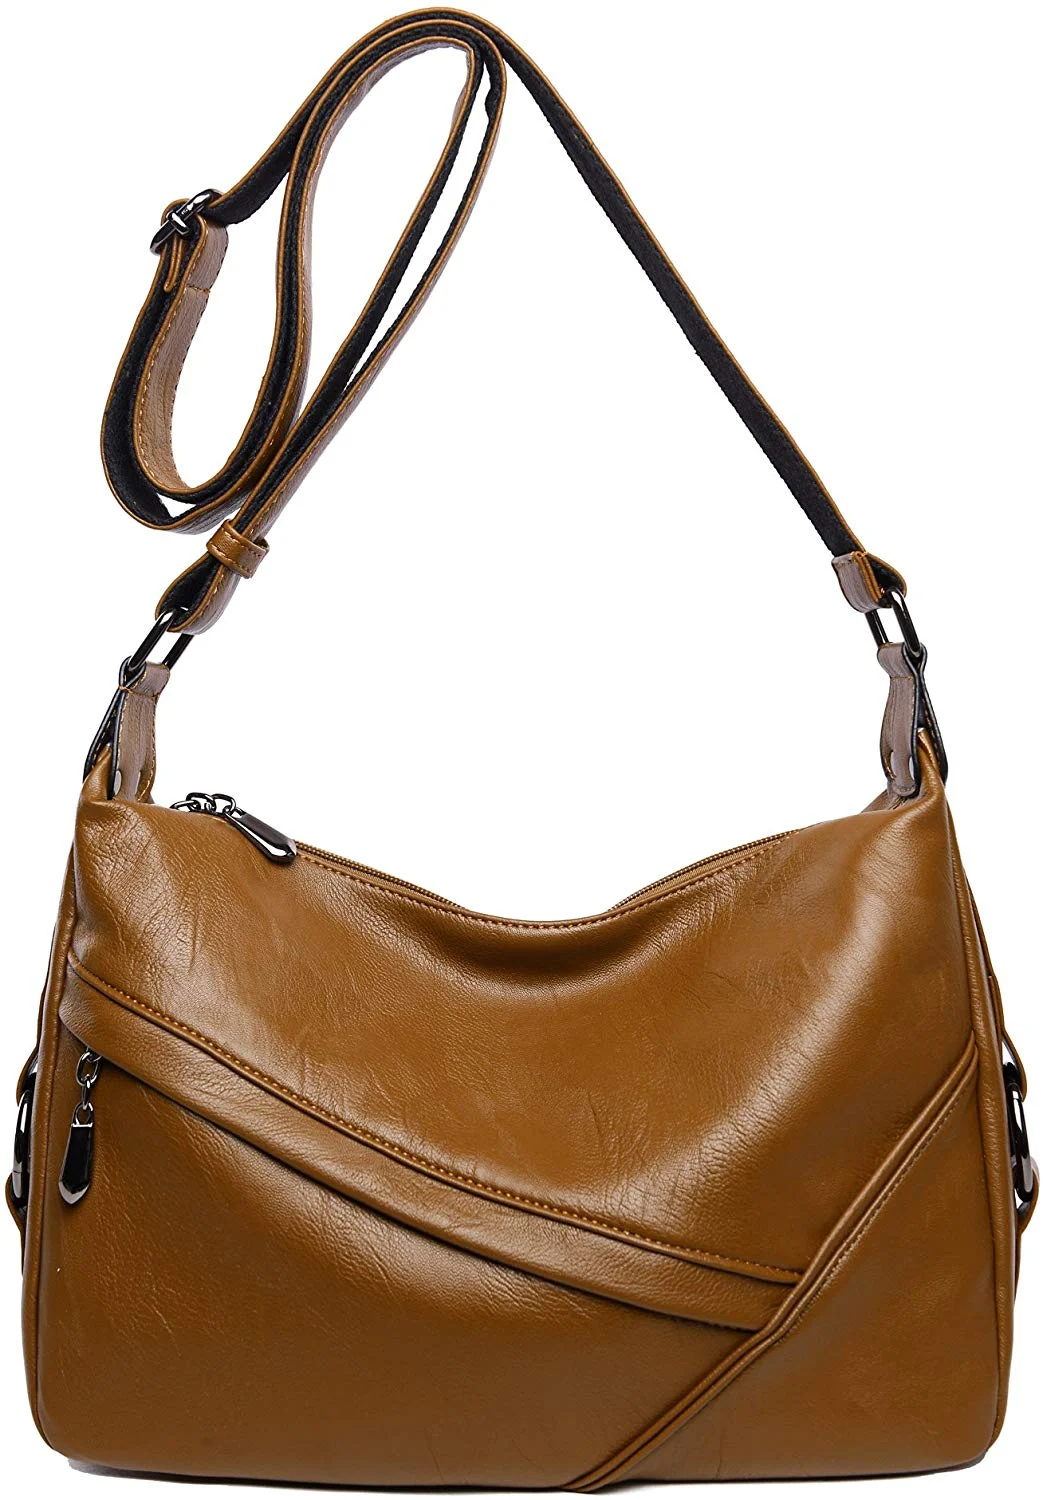 Women's Retro Sling Shoulder Bag from Covelin, Leather Crossbody Tote Handbag